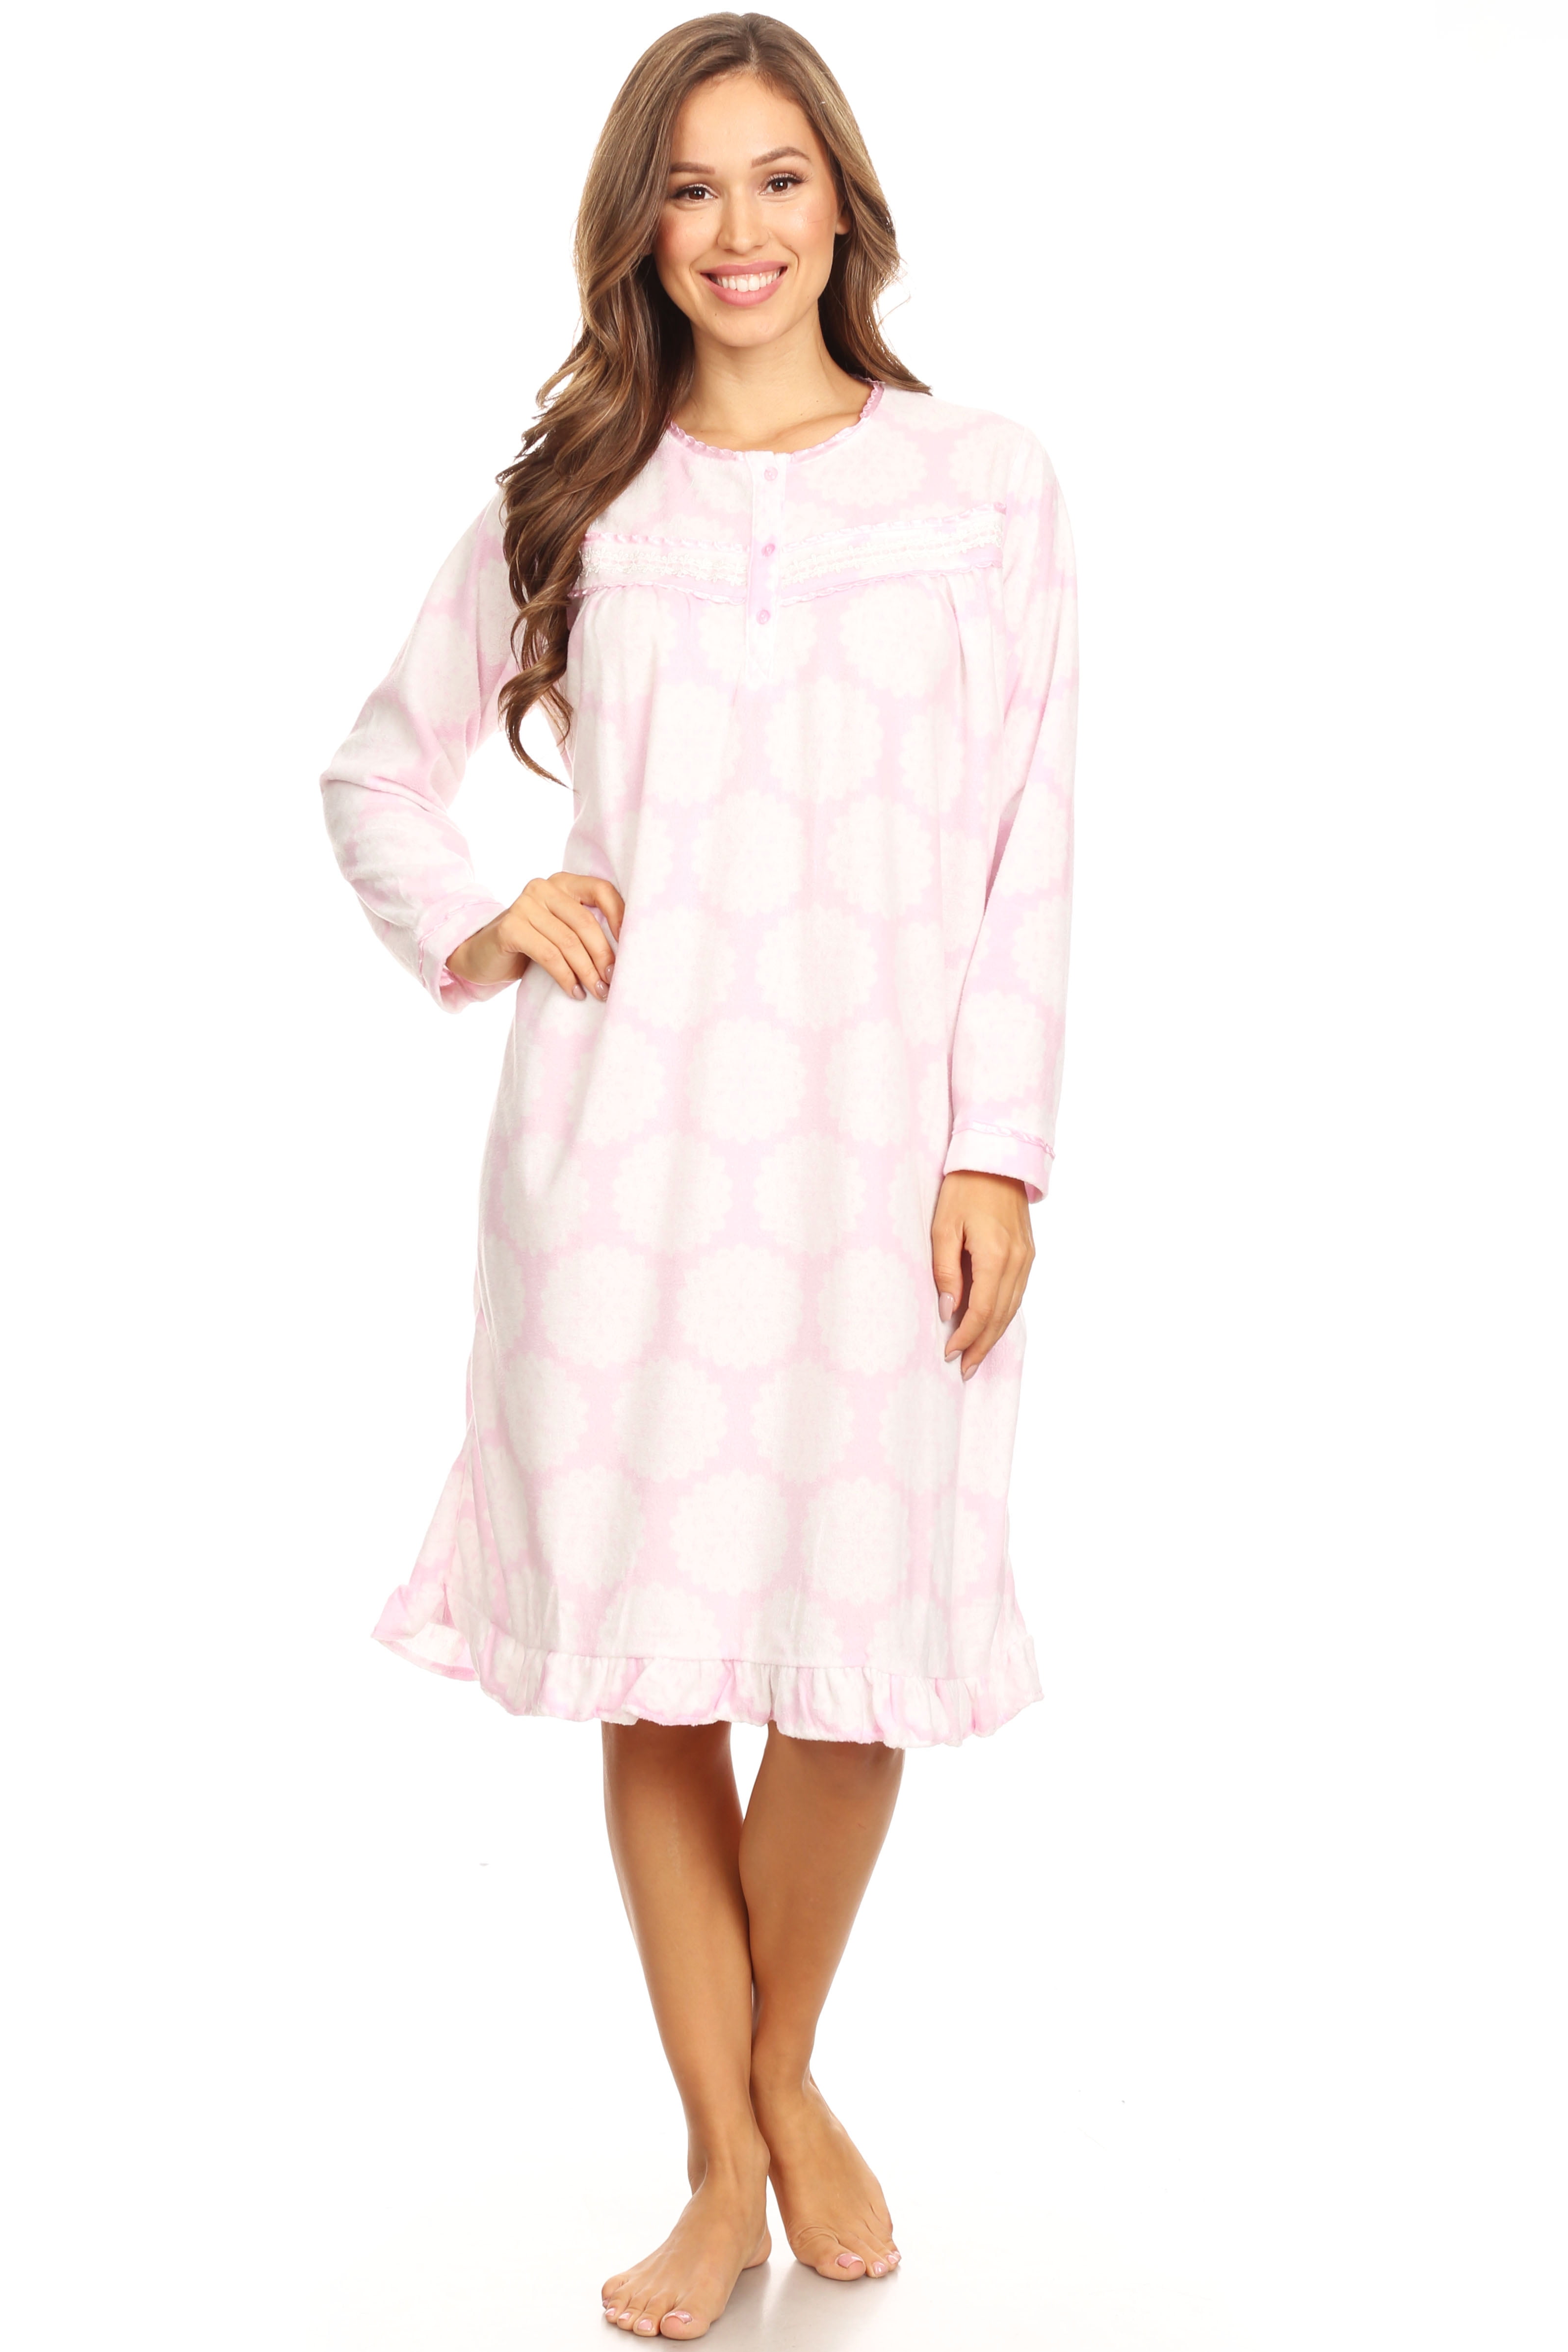 Lati Fashion Fleece Women Nightgown Sleepwear Pajamas Female Long Sleeve Sleep Dress Nightshirt